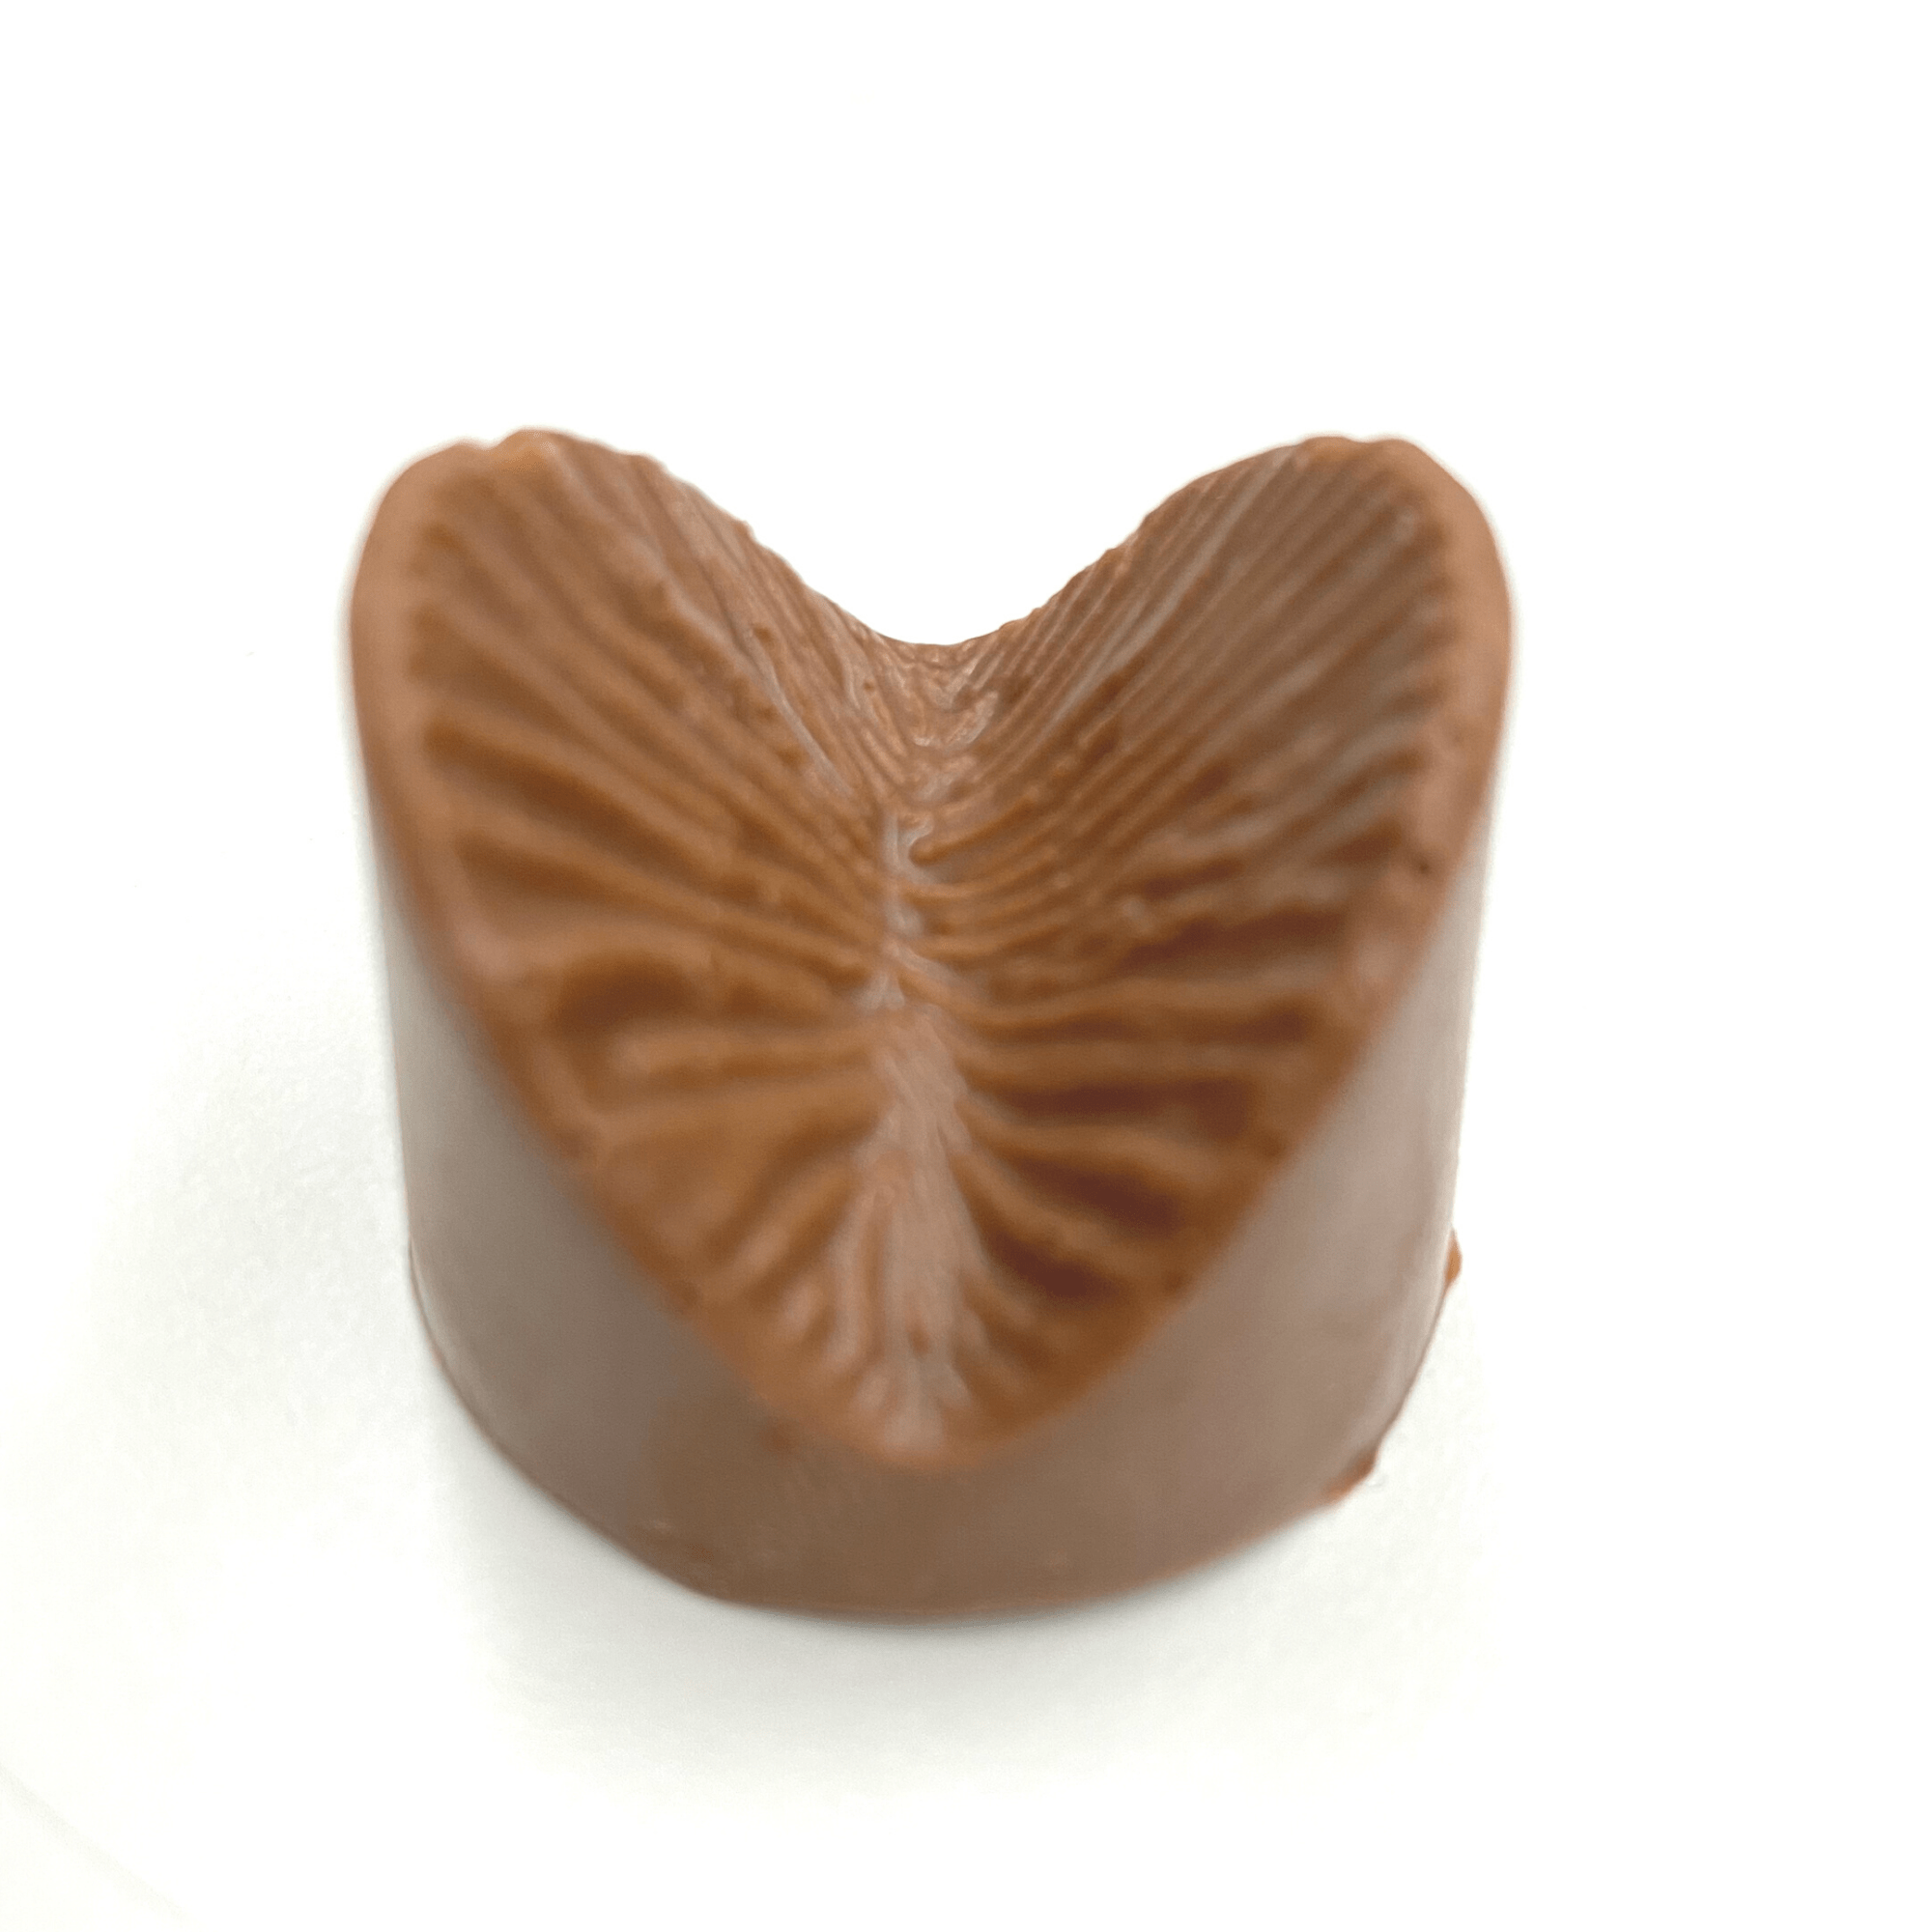 Buy Edible Chocolate Anus. Weird and funny stuff online - WeirdShitYouCanBuy